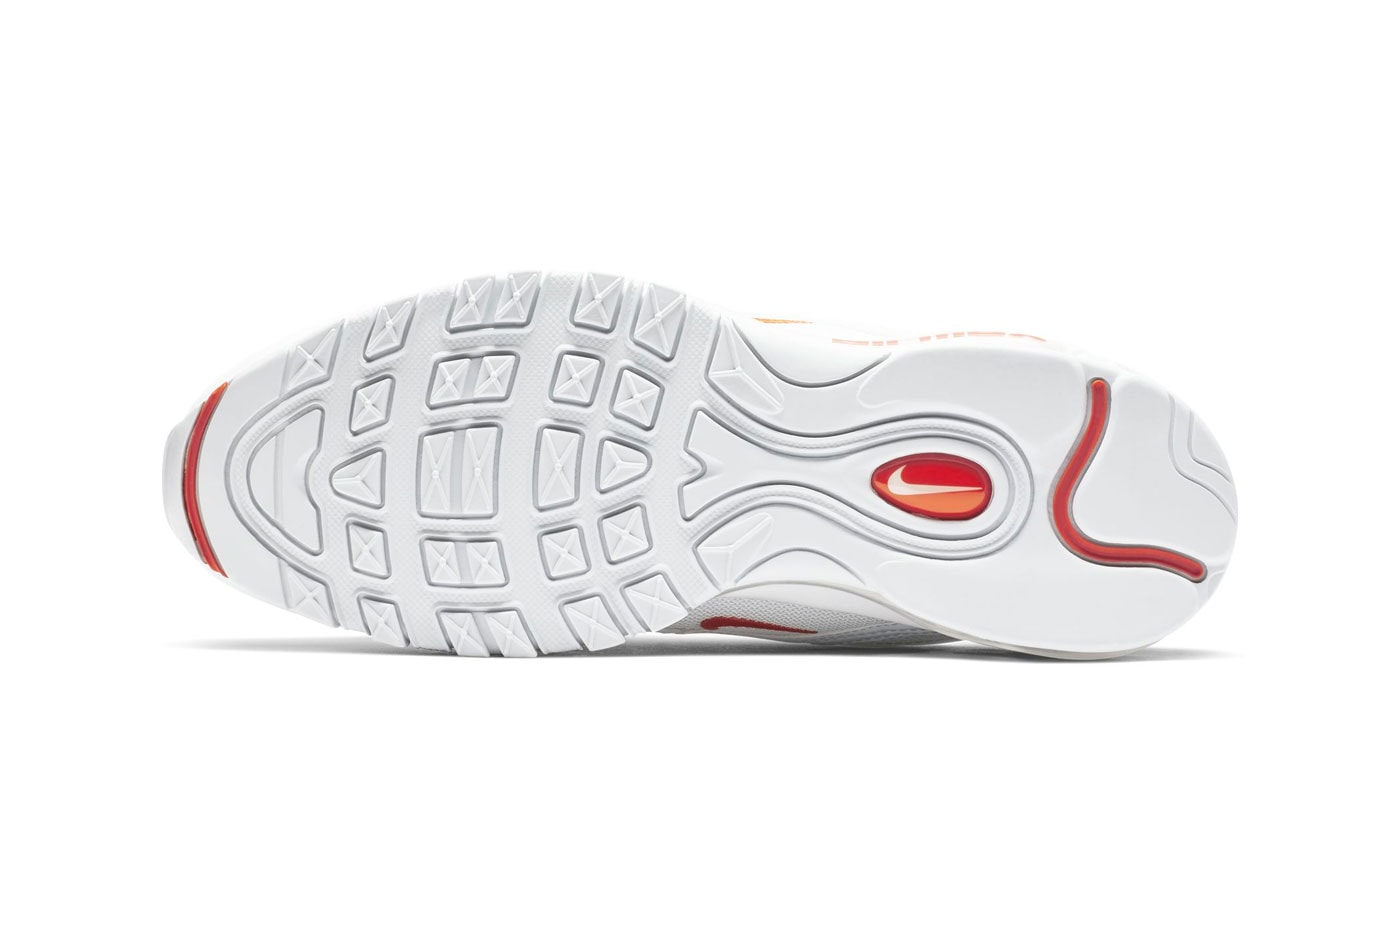 Nike Air Max 97 Team Orange Release Date sneaker shoes Pure Platinum White